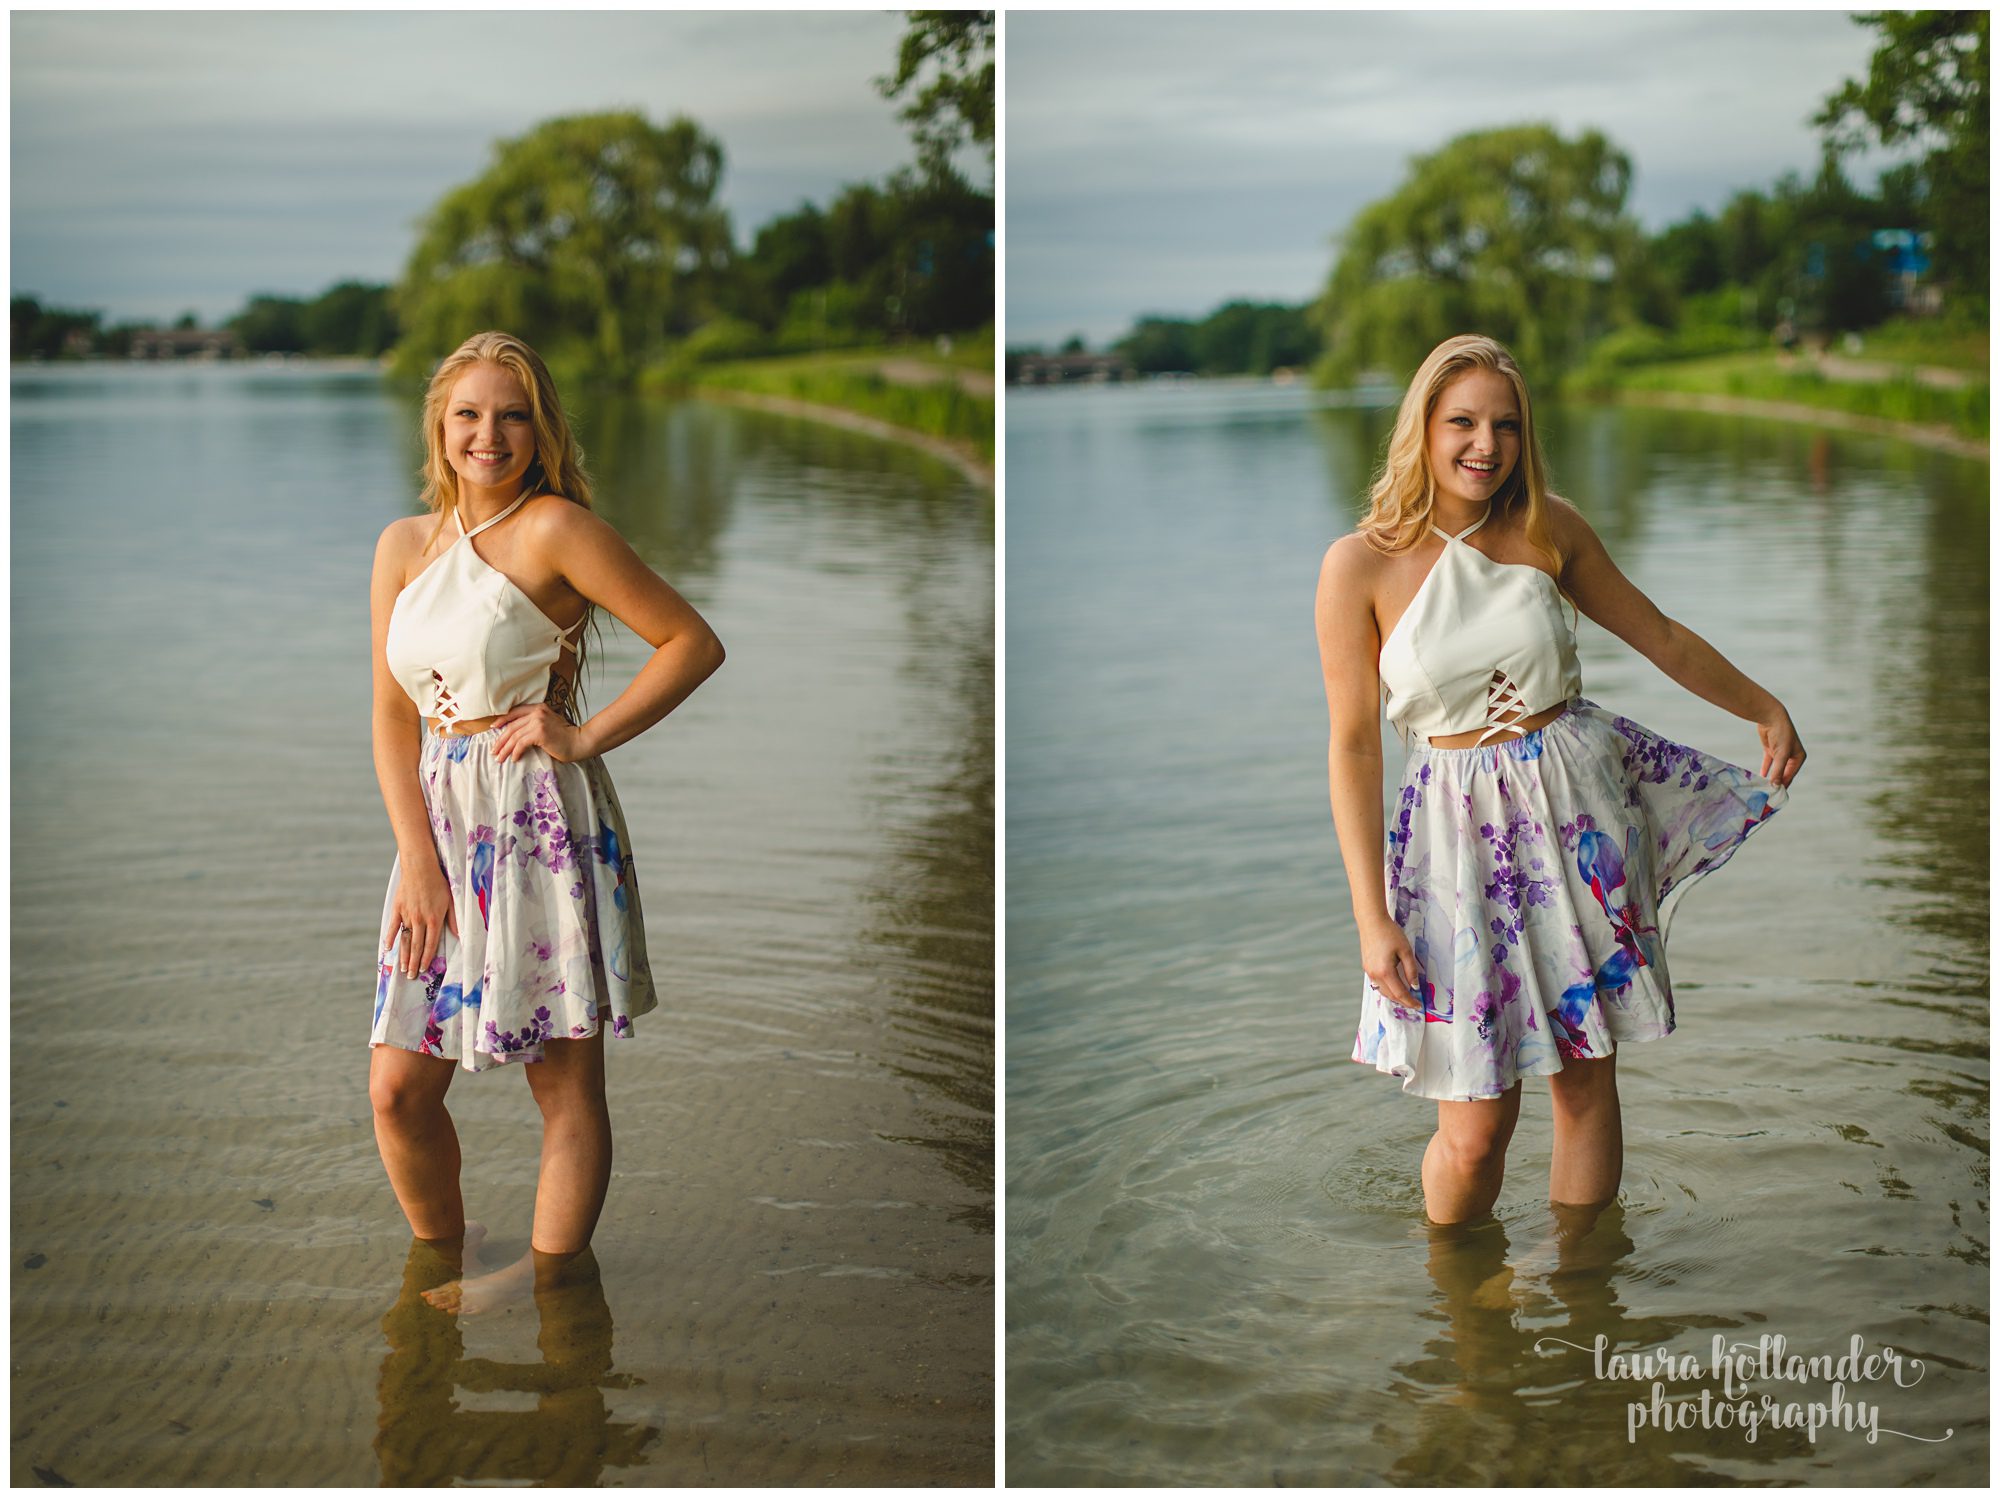 sunset lake senior portraits, senior girl with lake setting, simple top and jeans, Battle Creek Photographer Laura Hollander Photography